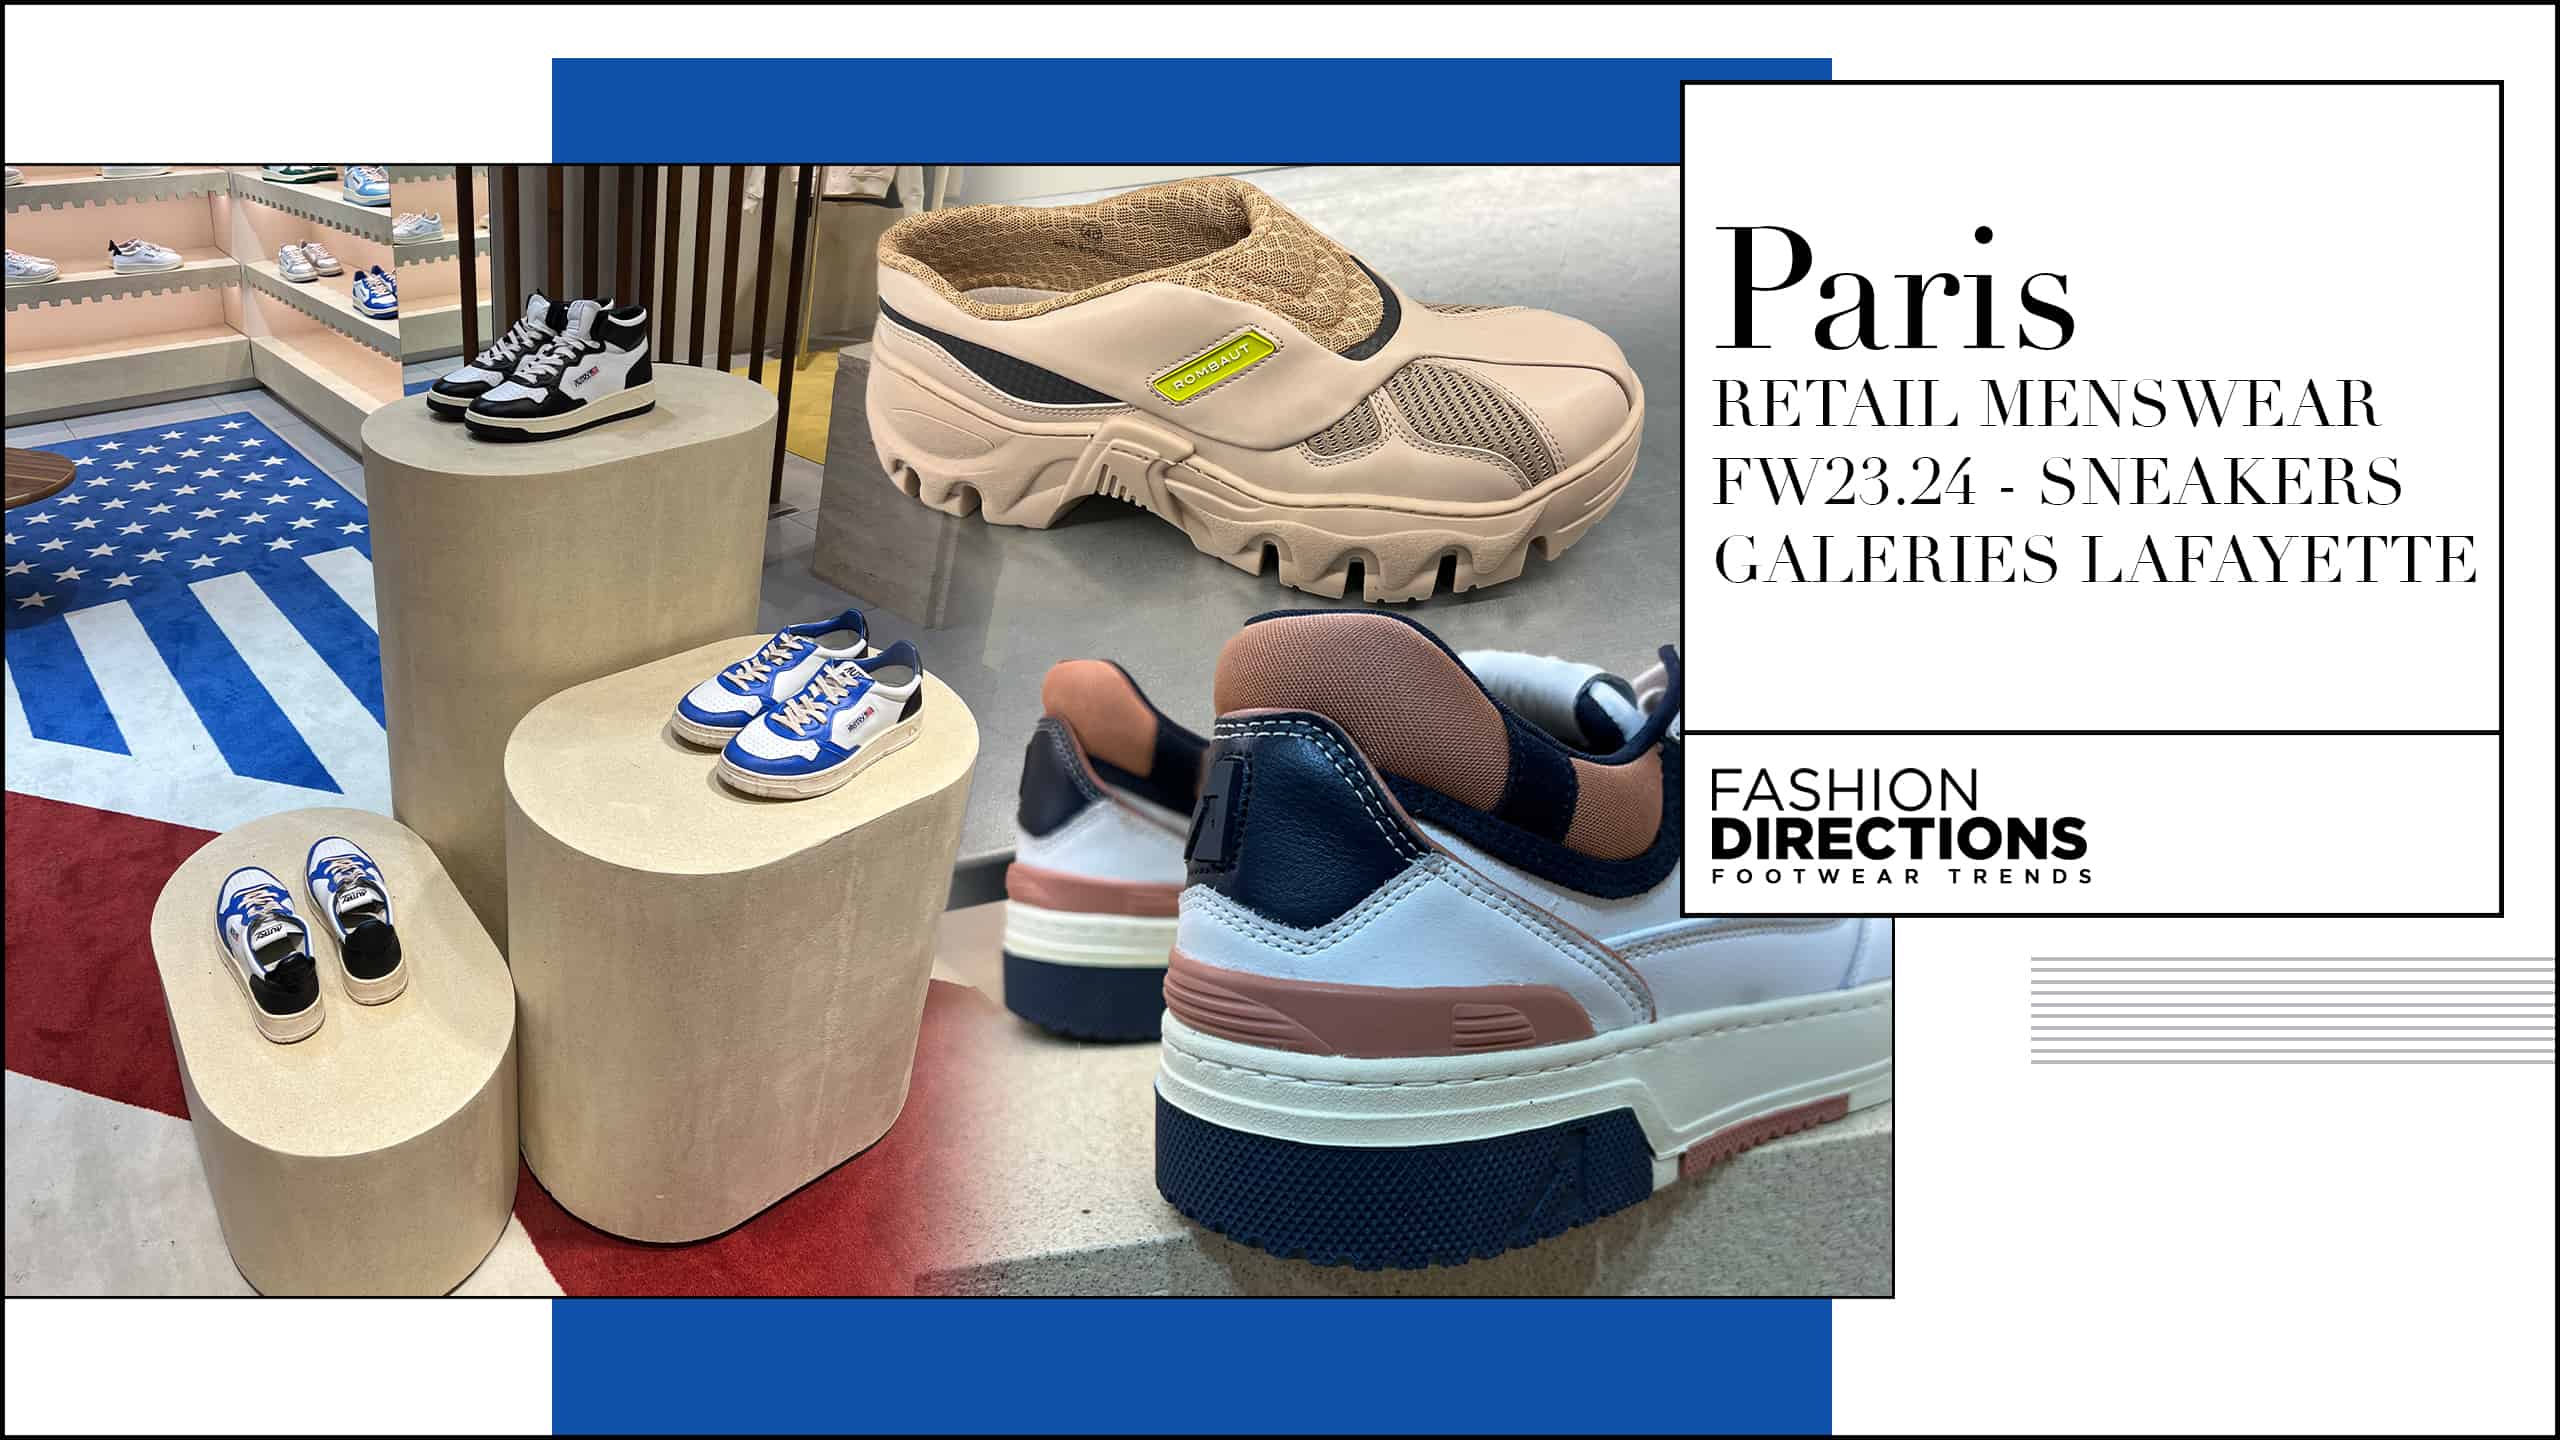 Paris Retail Menswear fw23.24 Sneakers Galeries Lafayette